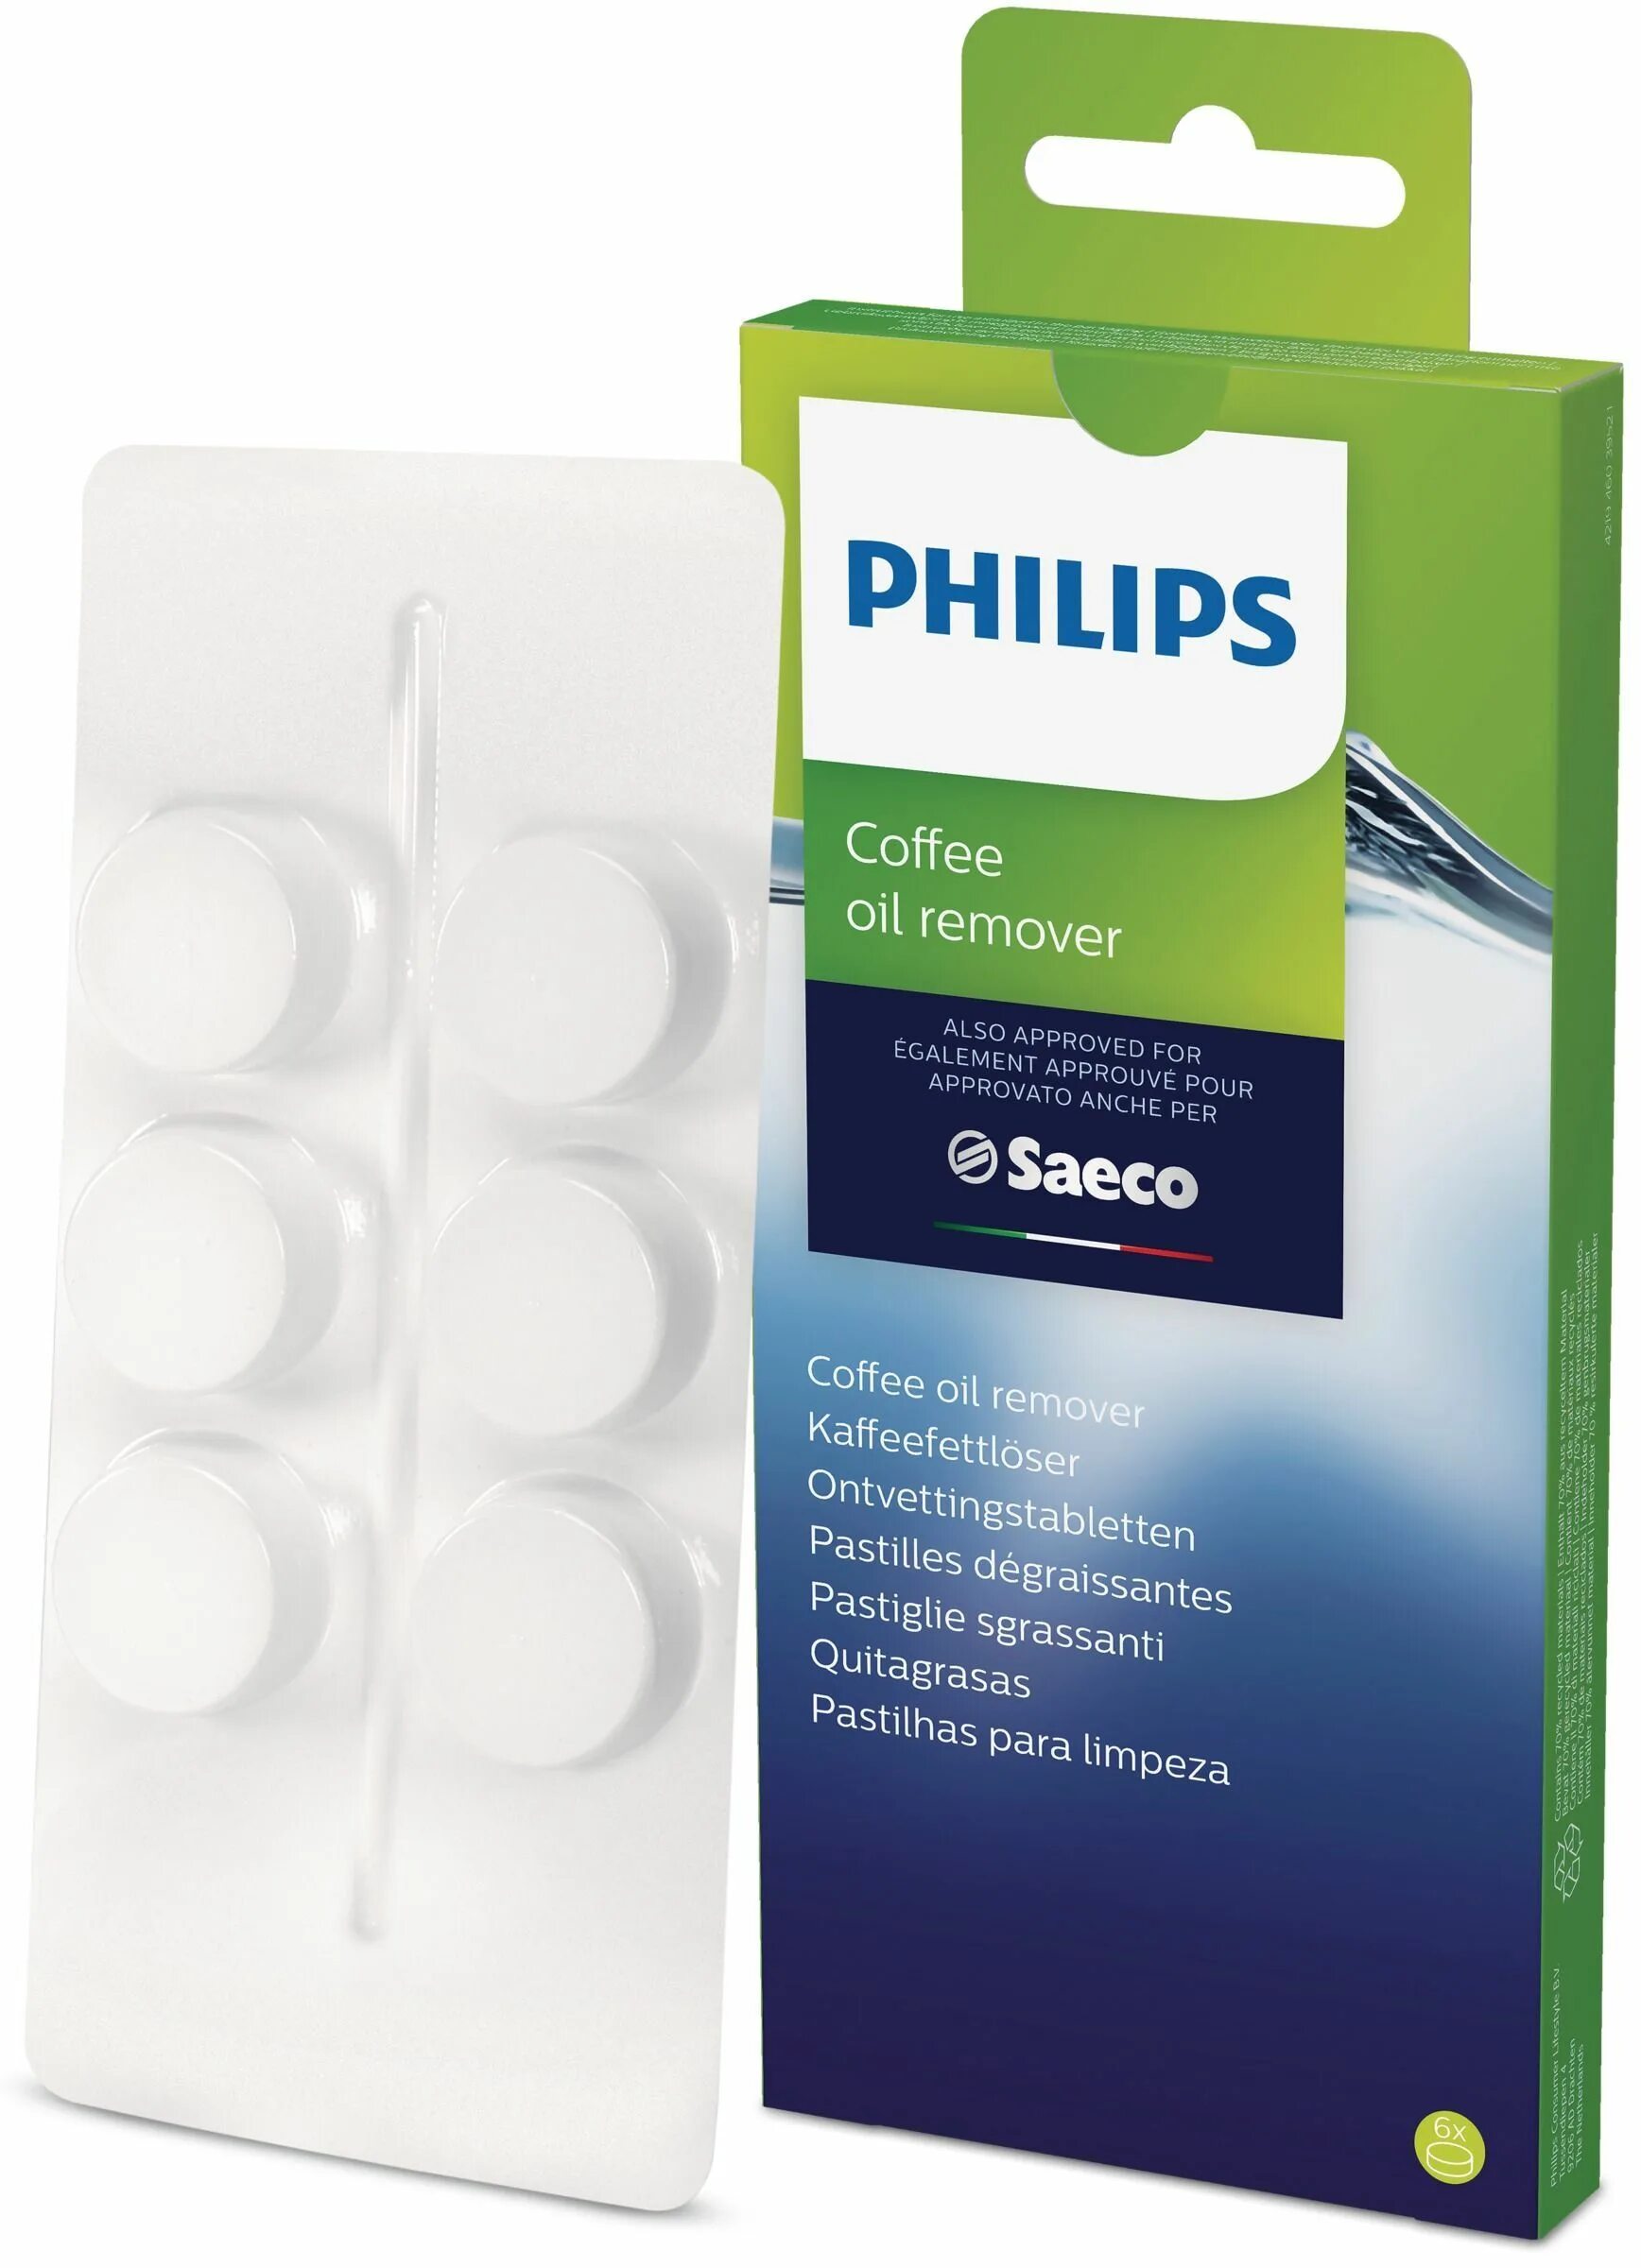 Philips средство для очистки. Средство Philips ca6704/10. Средство для очистки от кофейных масел для кофемашин Philips ca6704/10. Средство для очистки от кофейных масел для кофемашин Philips ca6704/10, 6 шт. Philips Saeco ca6704.